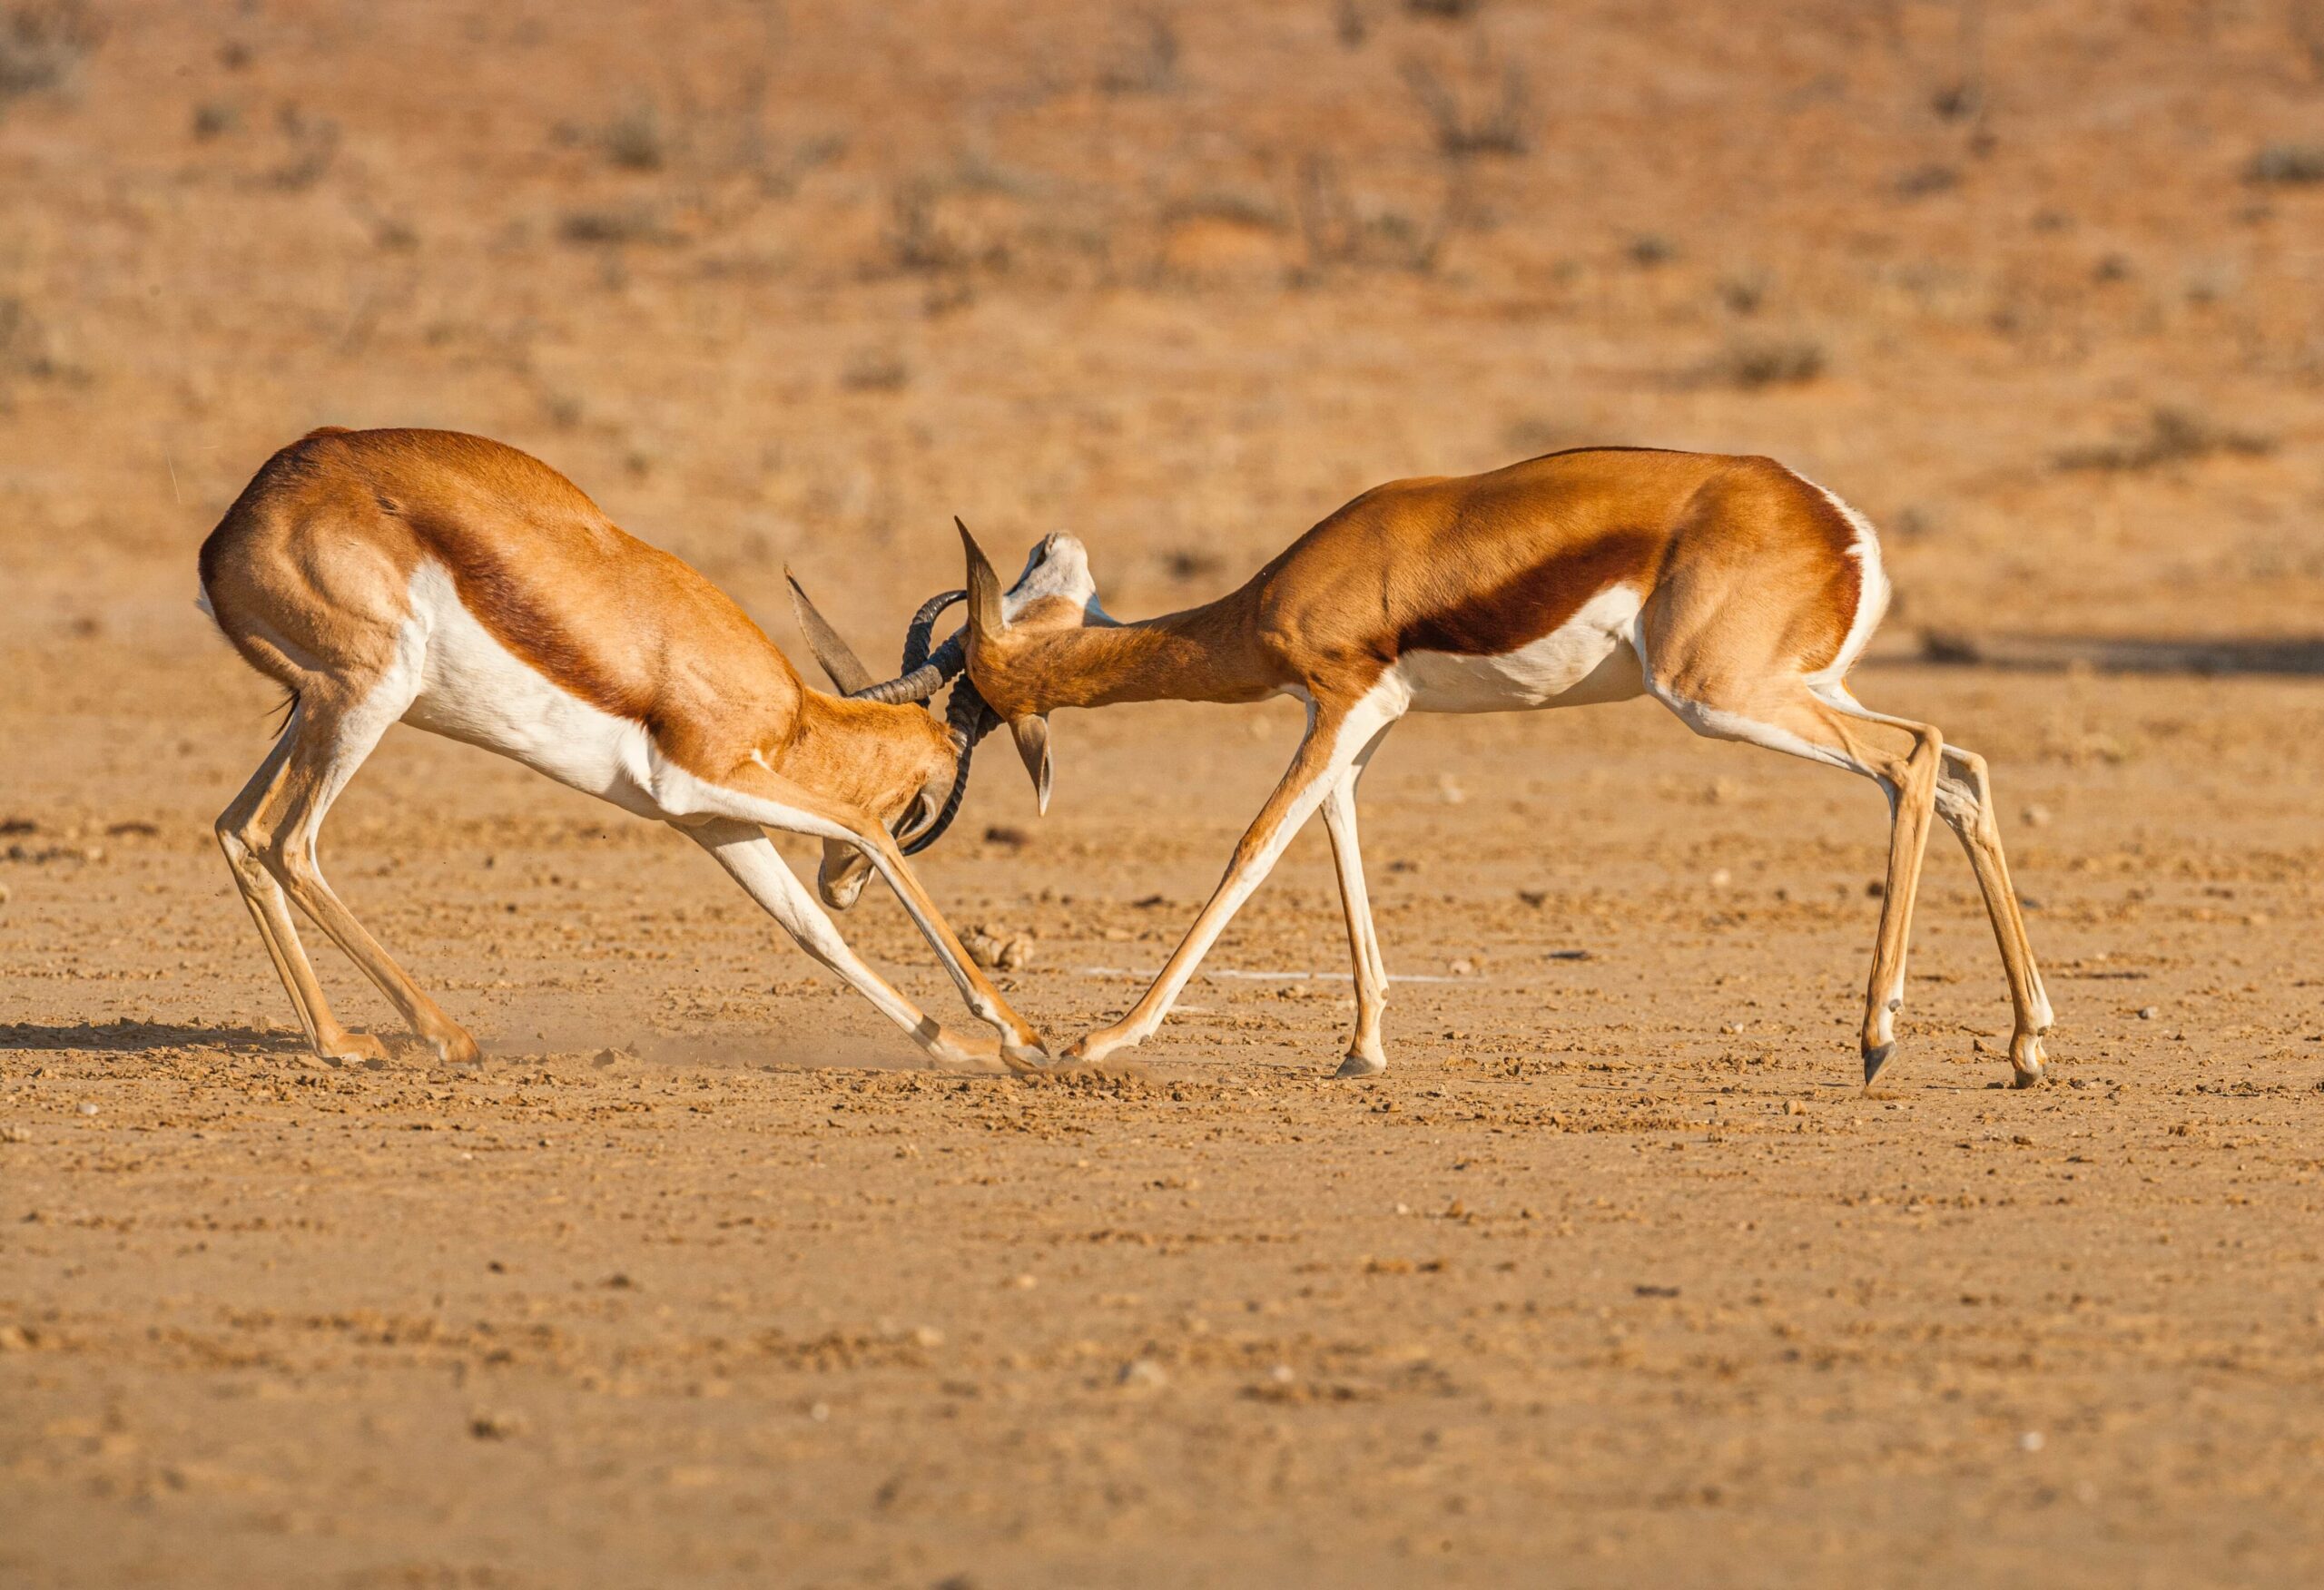 Springbok fighting in the Kalahari